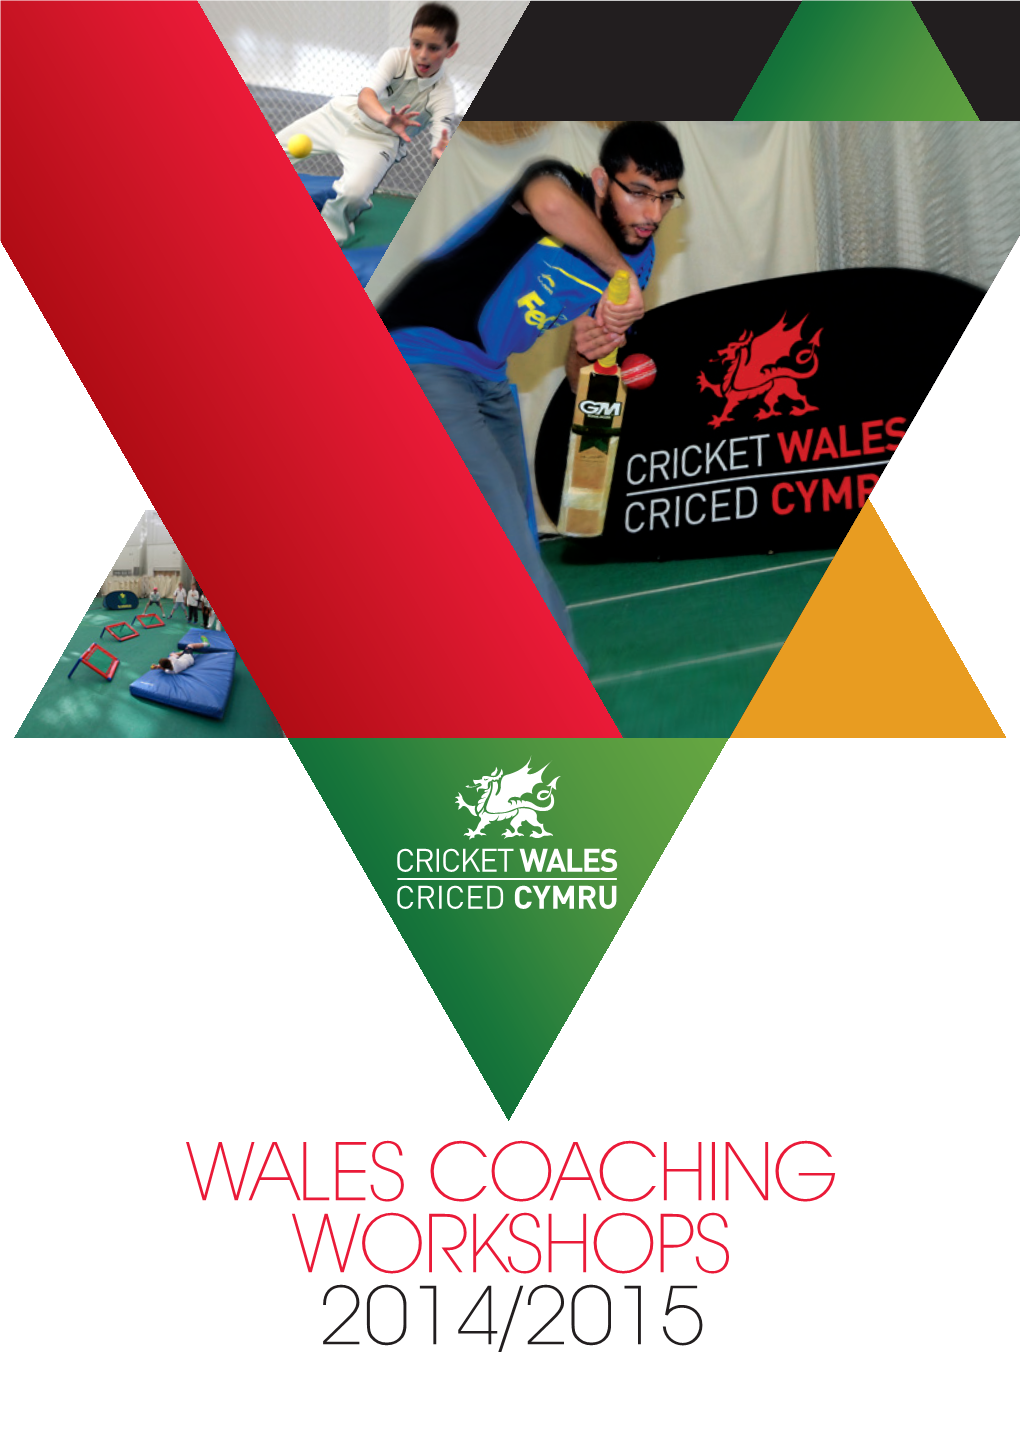 Wales Coaching Workshops 2014/2015 03